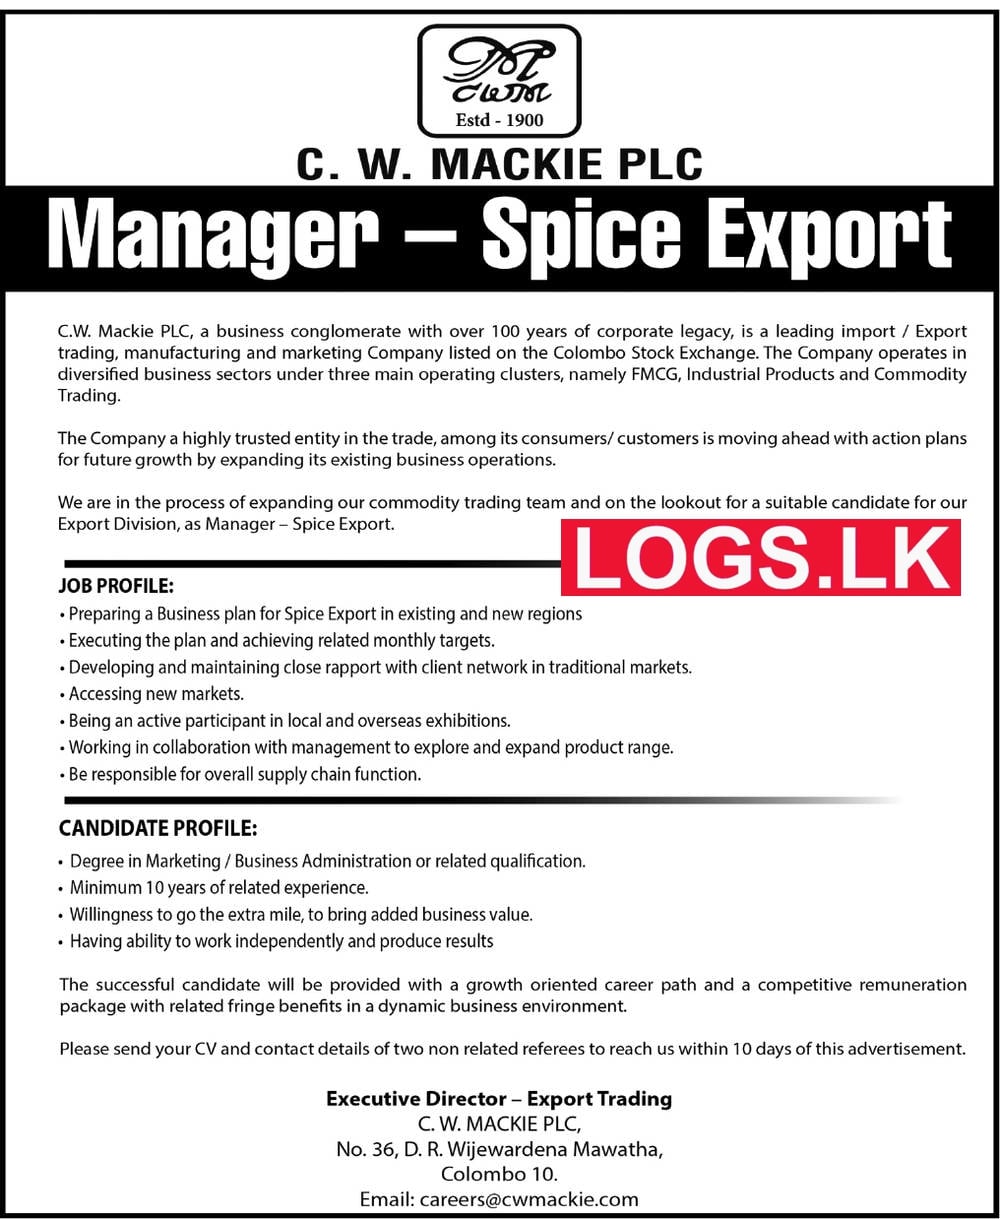 Spice Export Manager Job Vacancy 2023 in C W Mackie PLC Jobs Vacancies Details, Application Form Download